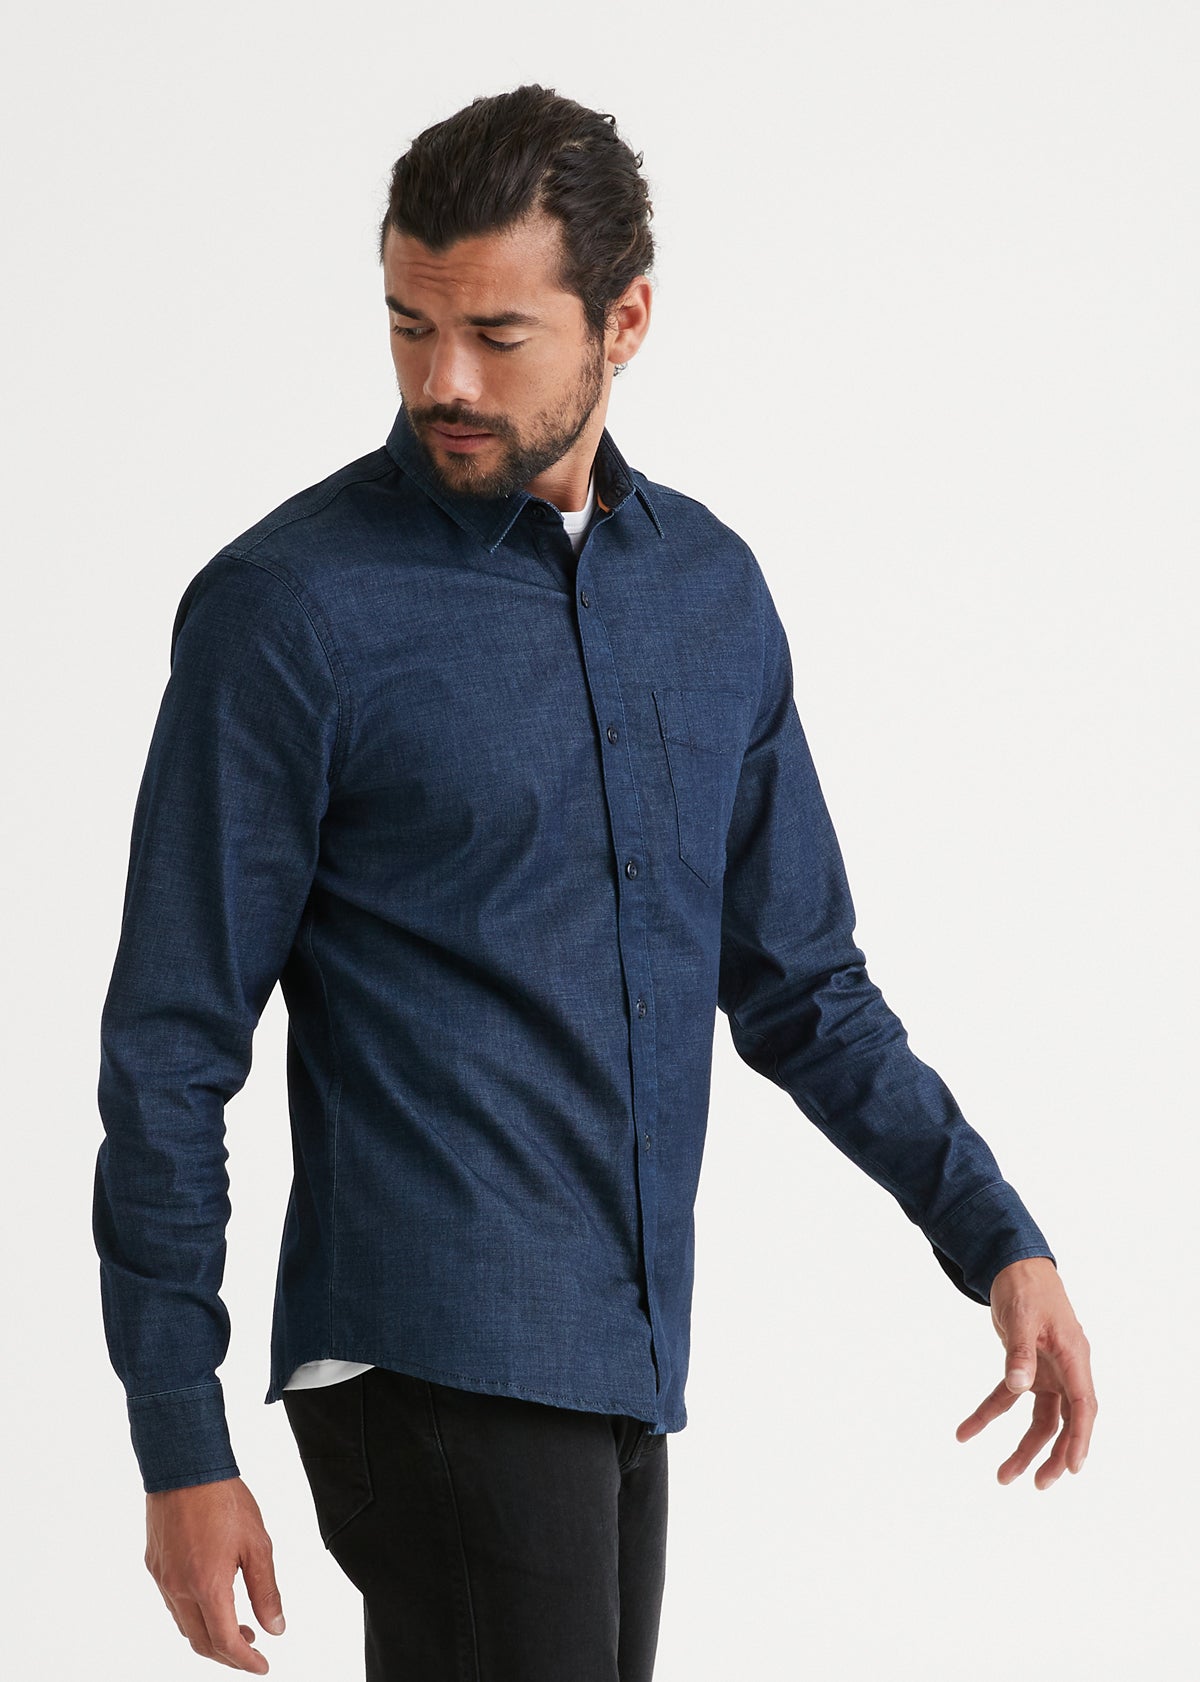 Custom Denim Shirt - 7oz dx : Made To Measure Custom Jeans For Men & Women,  MakeYourOwnJeans®